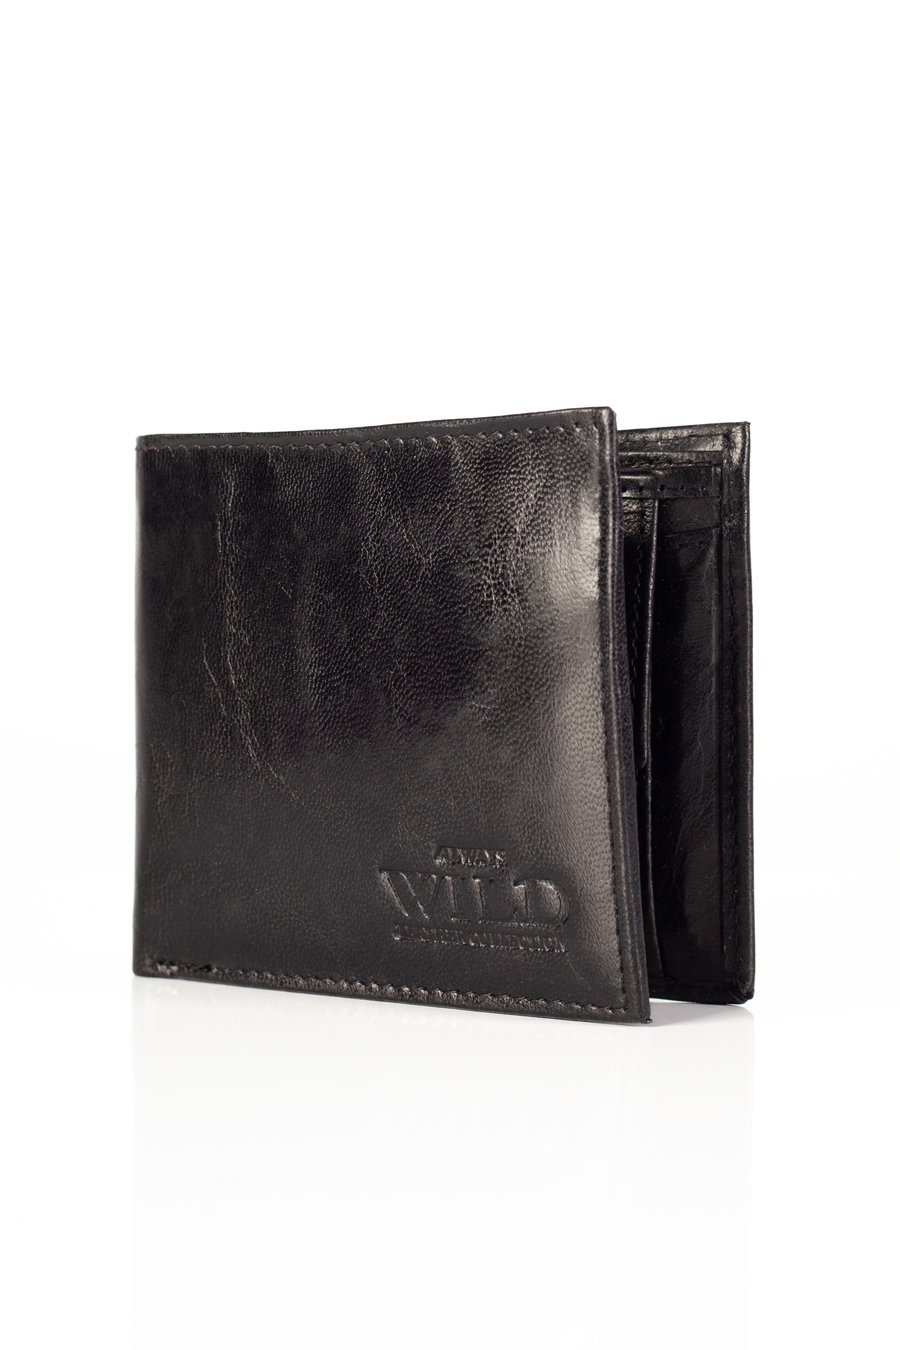 Wallet WILD N2002-VTK-BOX-4558-BLACK